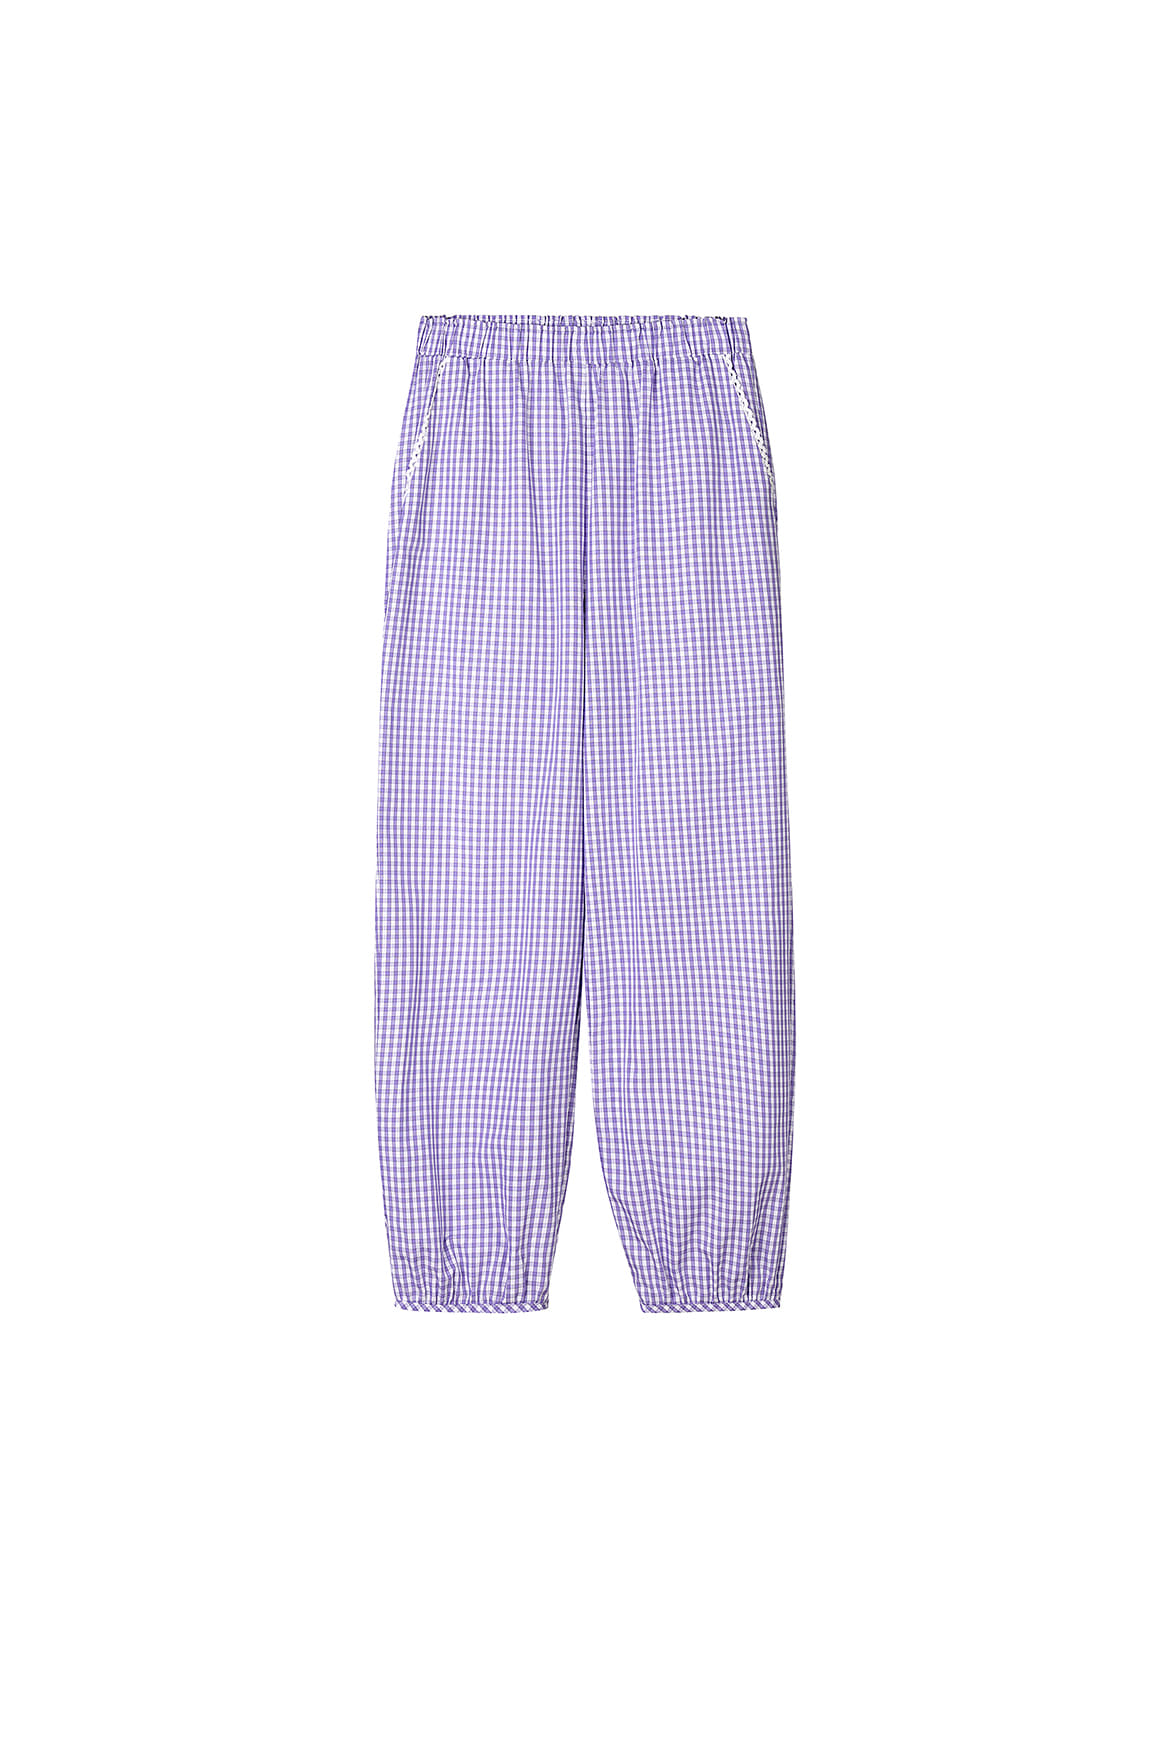 Lace Pajama Pants_Lilac-Check